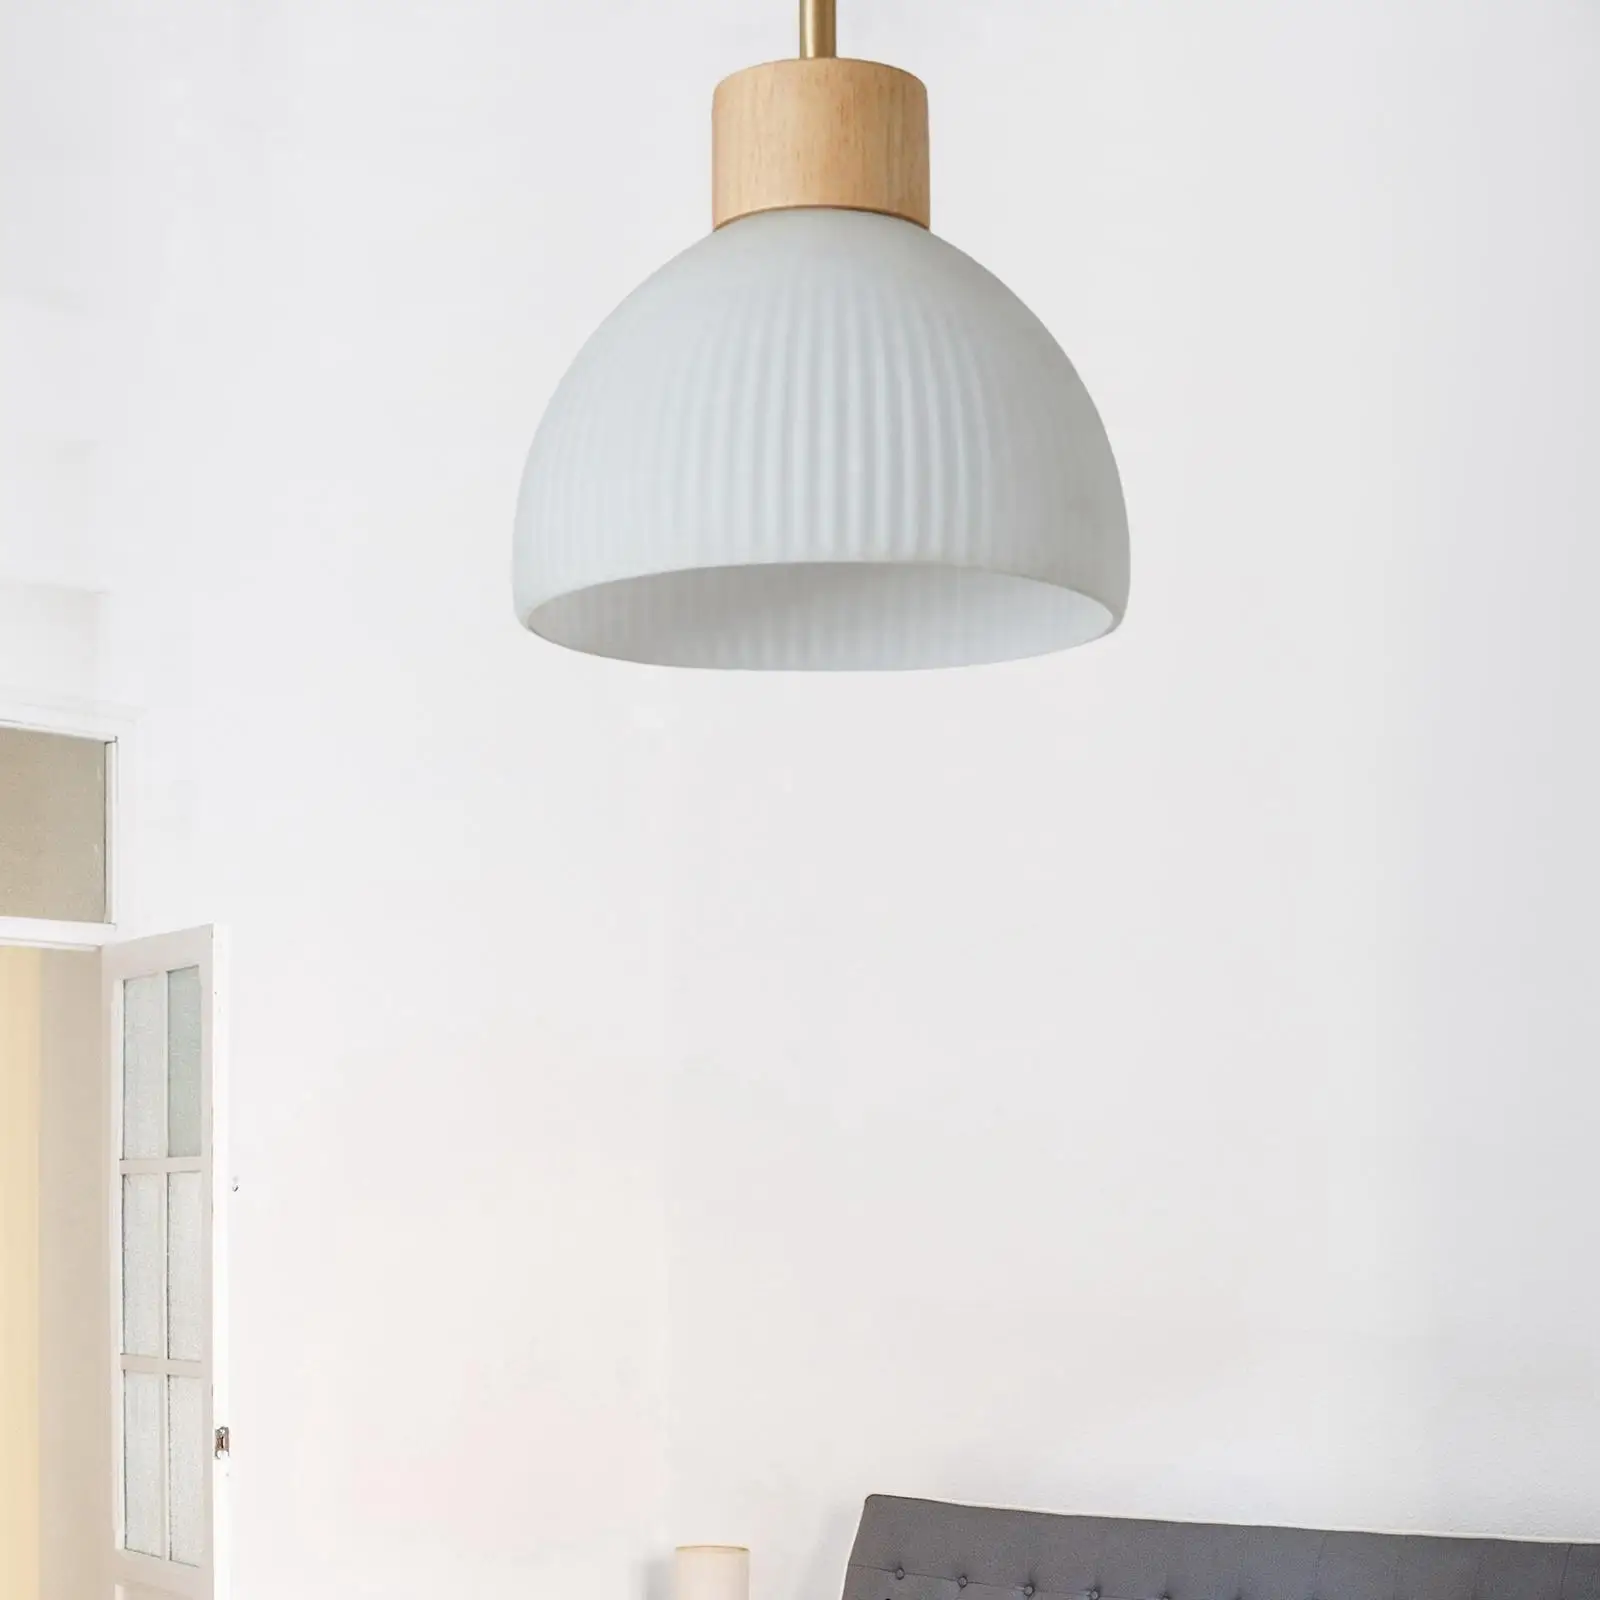 Modern Ceiling Lights Chandelier Lighting Fixture Decor LED Pendant Lamp for Living Room, Home, Entrance Aisle, Aisle, Hallway